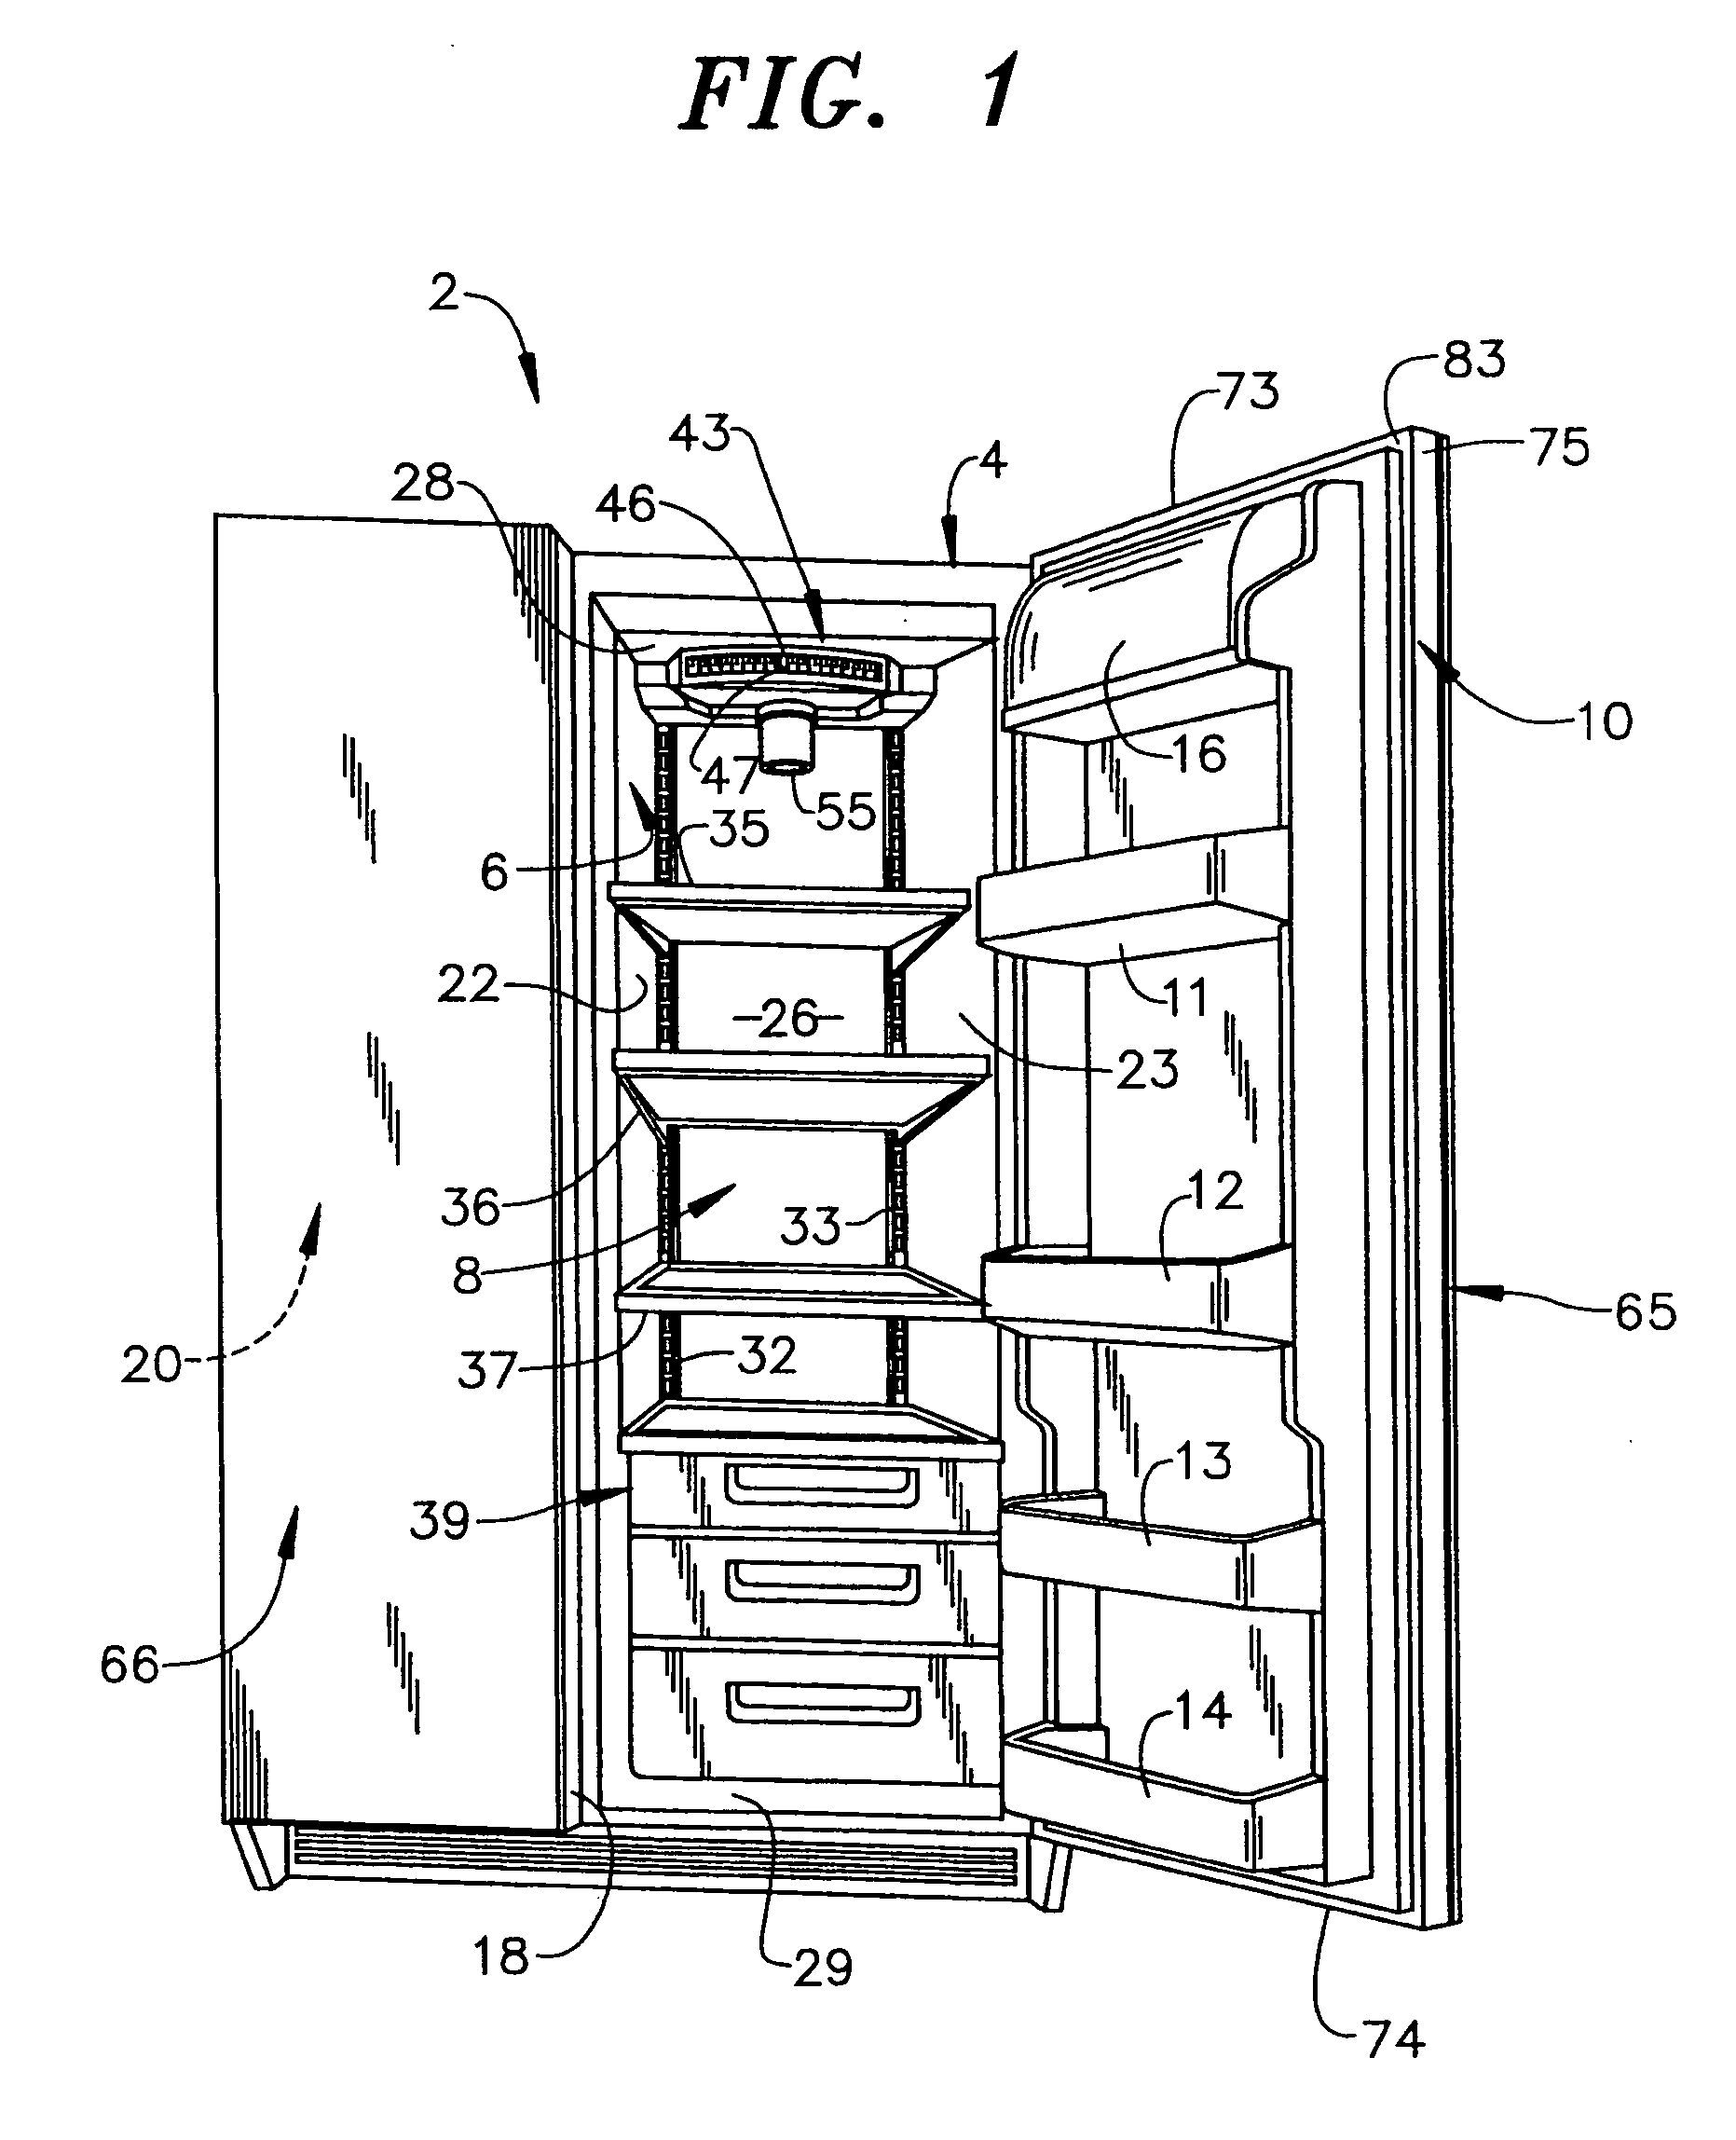 Kitchen appliance having floating glass panel